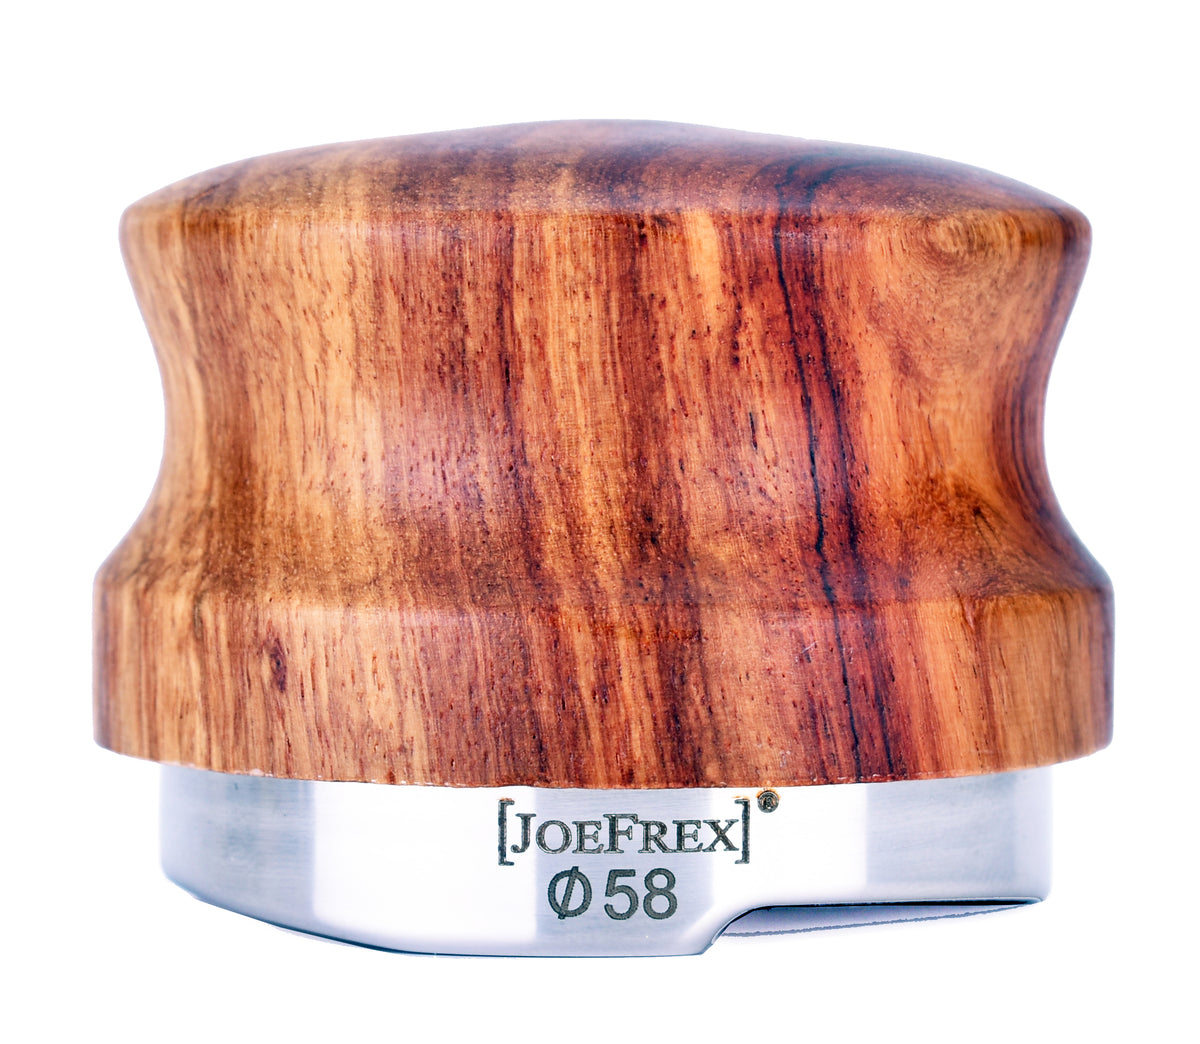 Barista Leveler Holz Joe Frex (58mm)